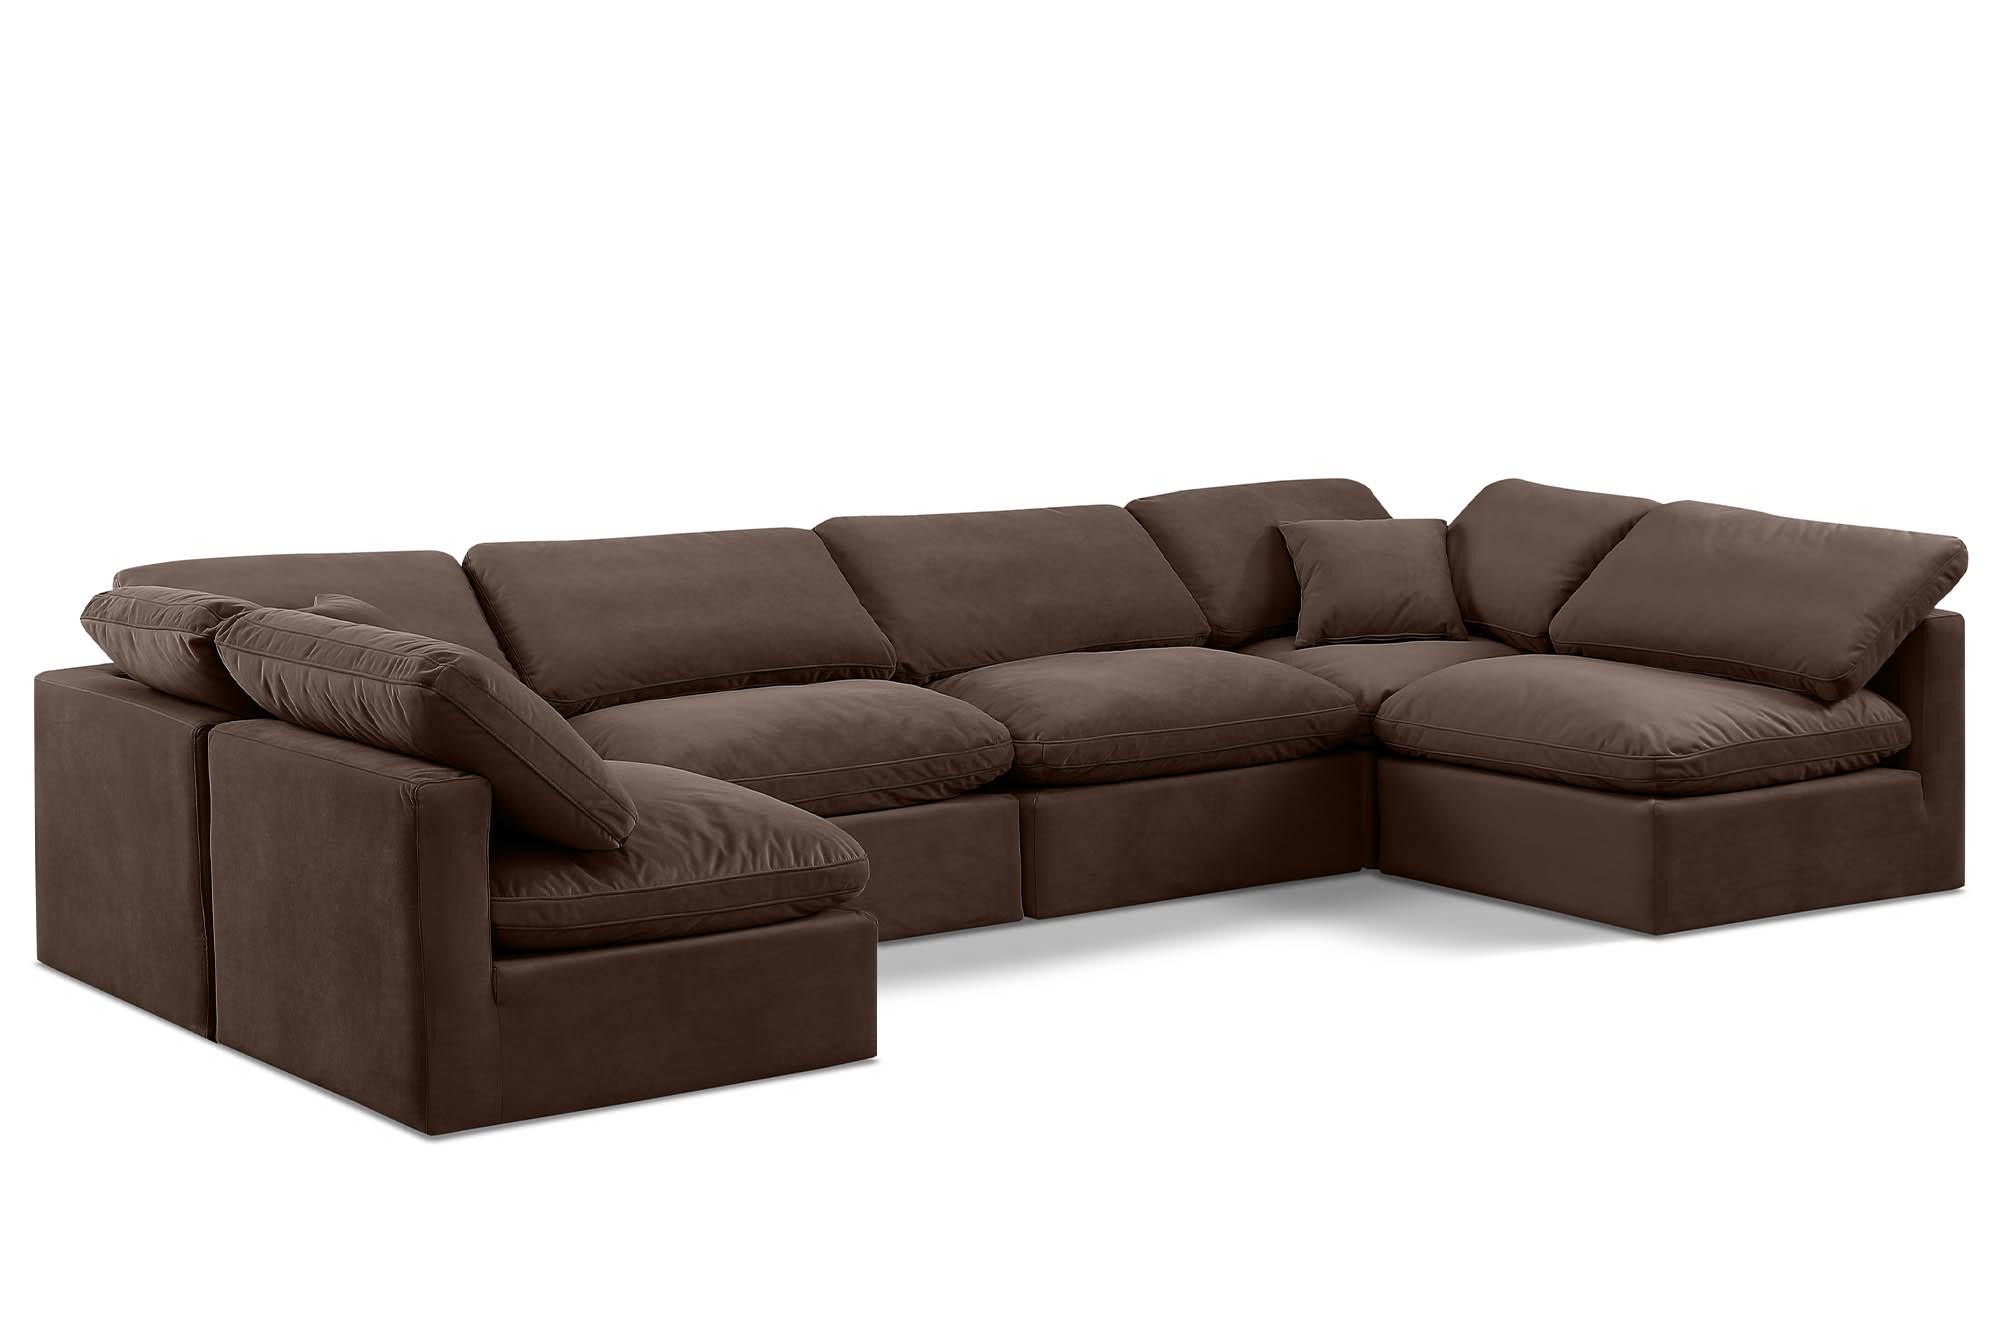 Contemporary, Modern Modular Sectional Sofa INDULGE 147Brown-Sec6D 147Brown-Sec6D in Brown Velvet